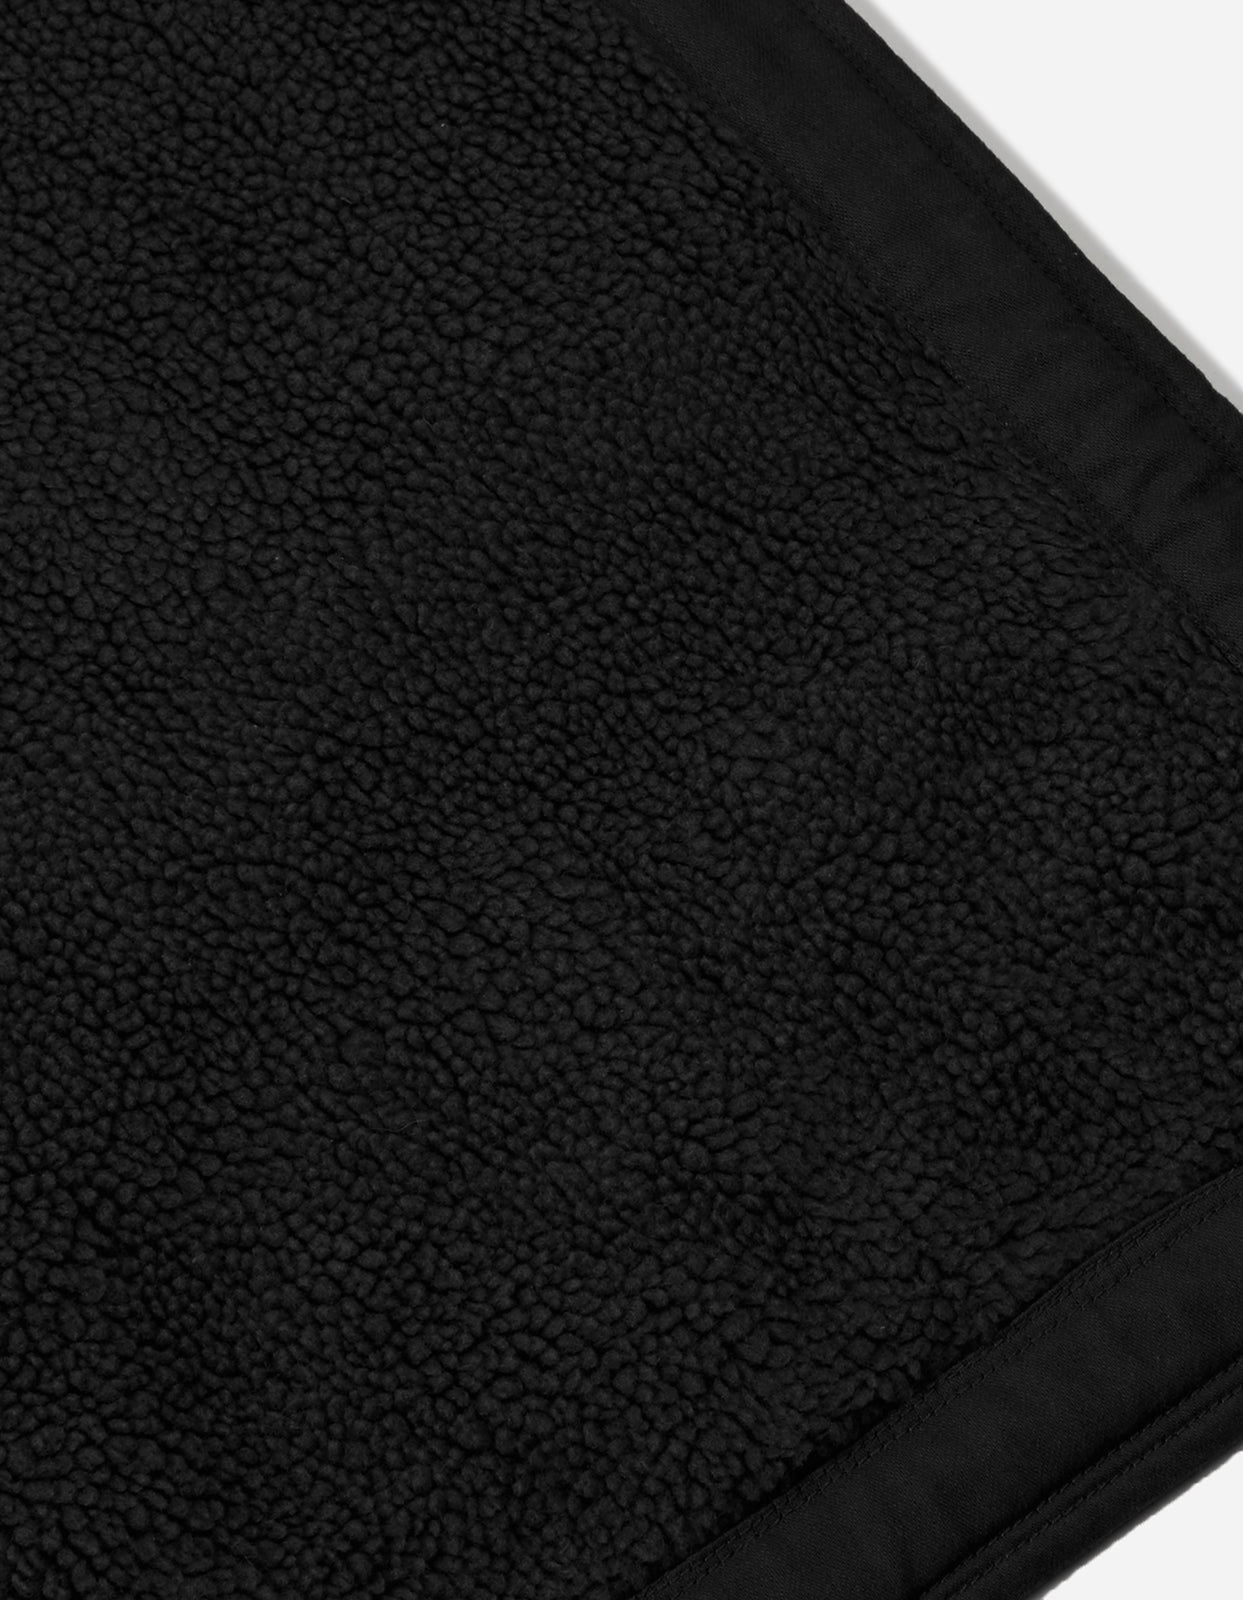 7029 Triquilted Blanket Coat 182 · Military Surplus Black